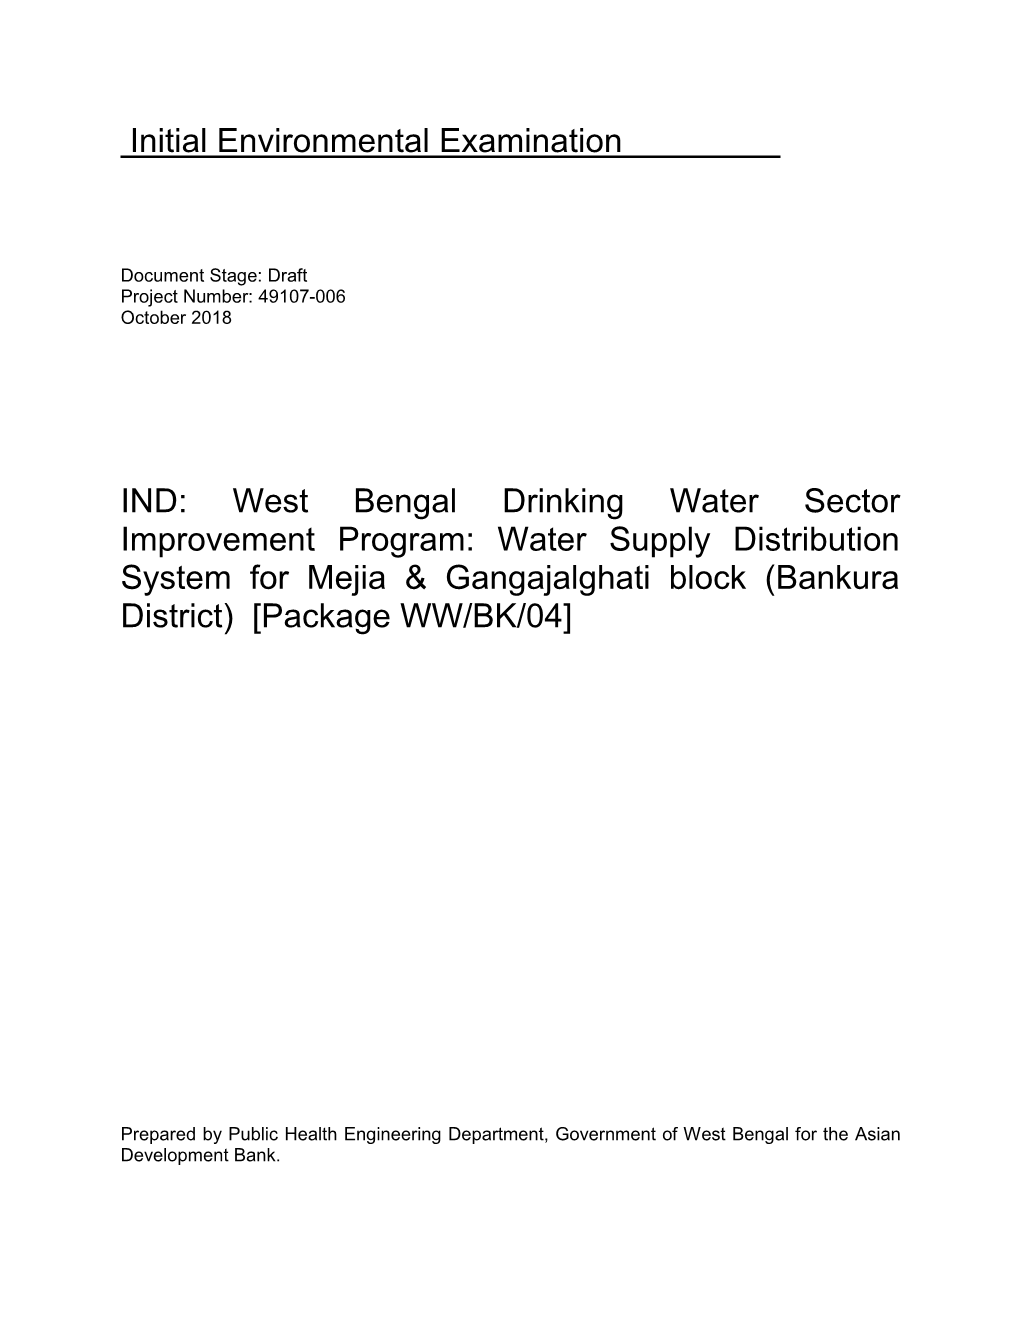 West Bengal Drinking Water Sector Improvement Program: Water Supply Distribution System for Mejia & Gangajalghati Block (Bankura District) [Package WW/BK/04]